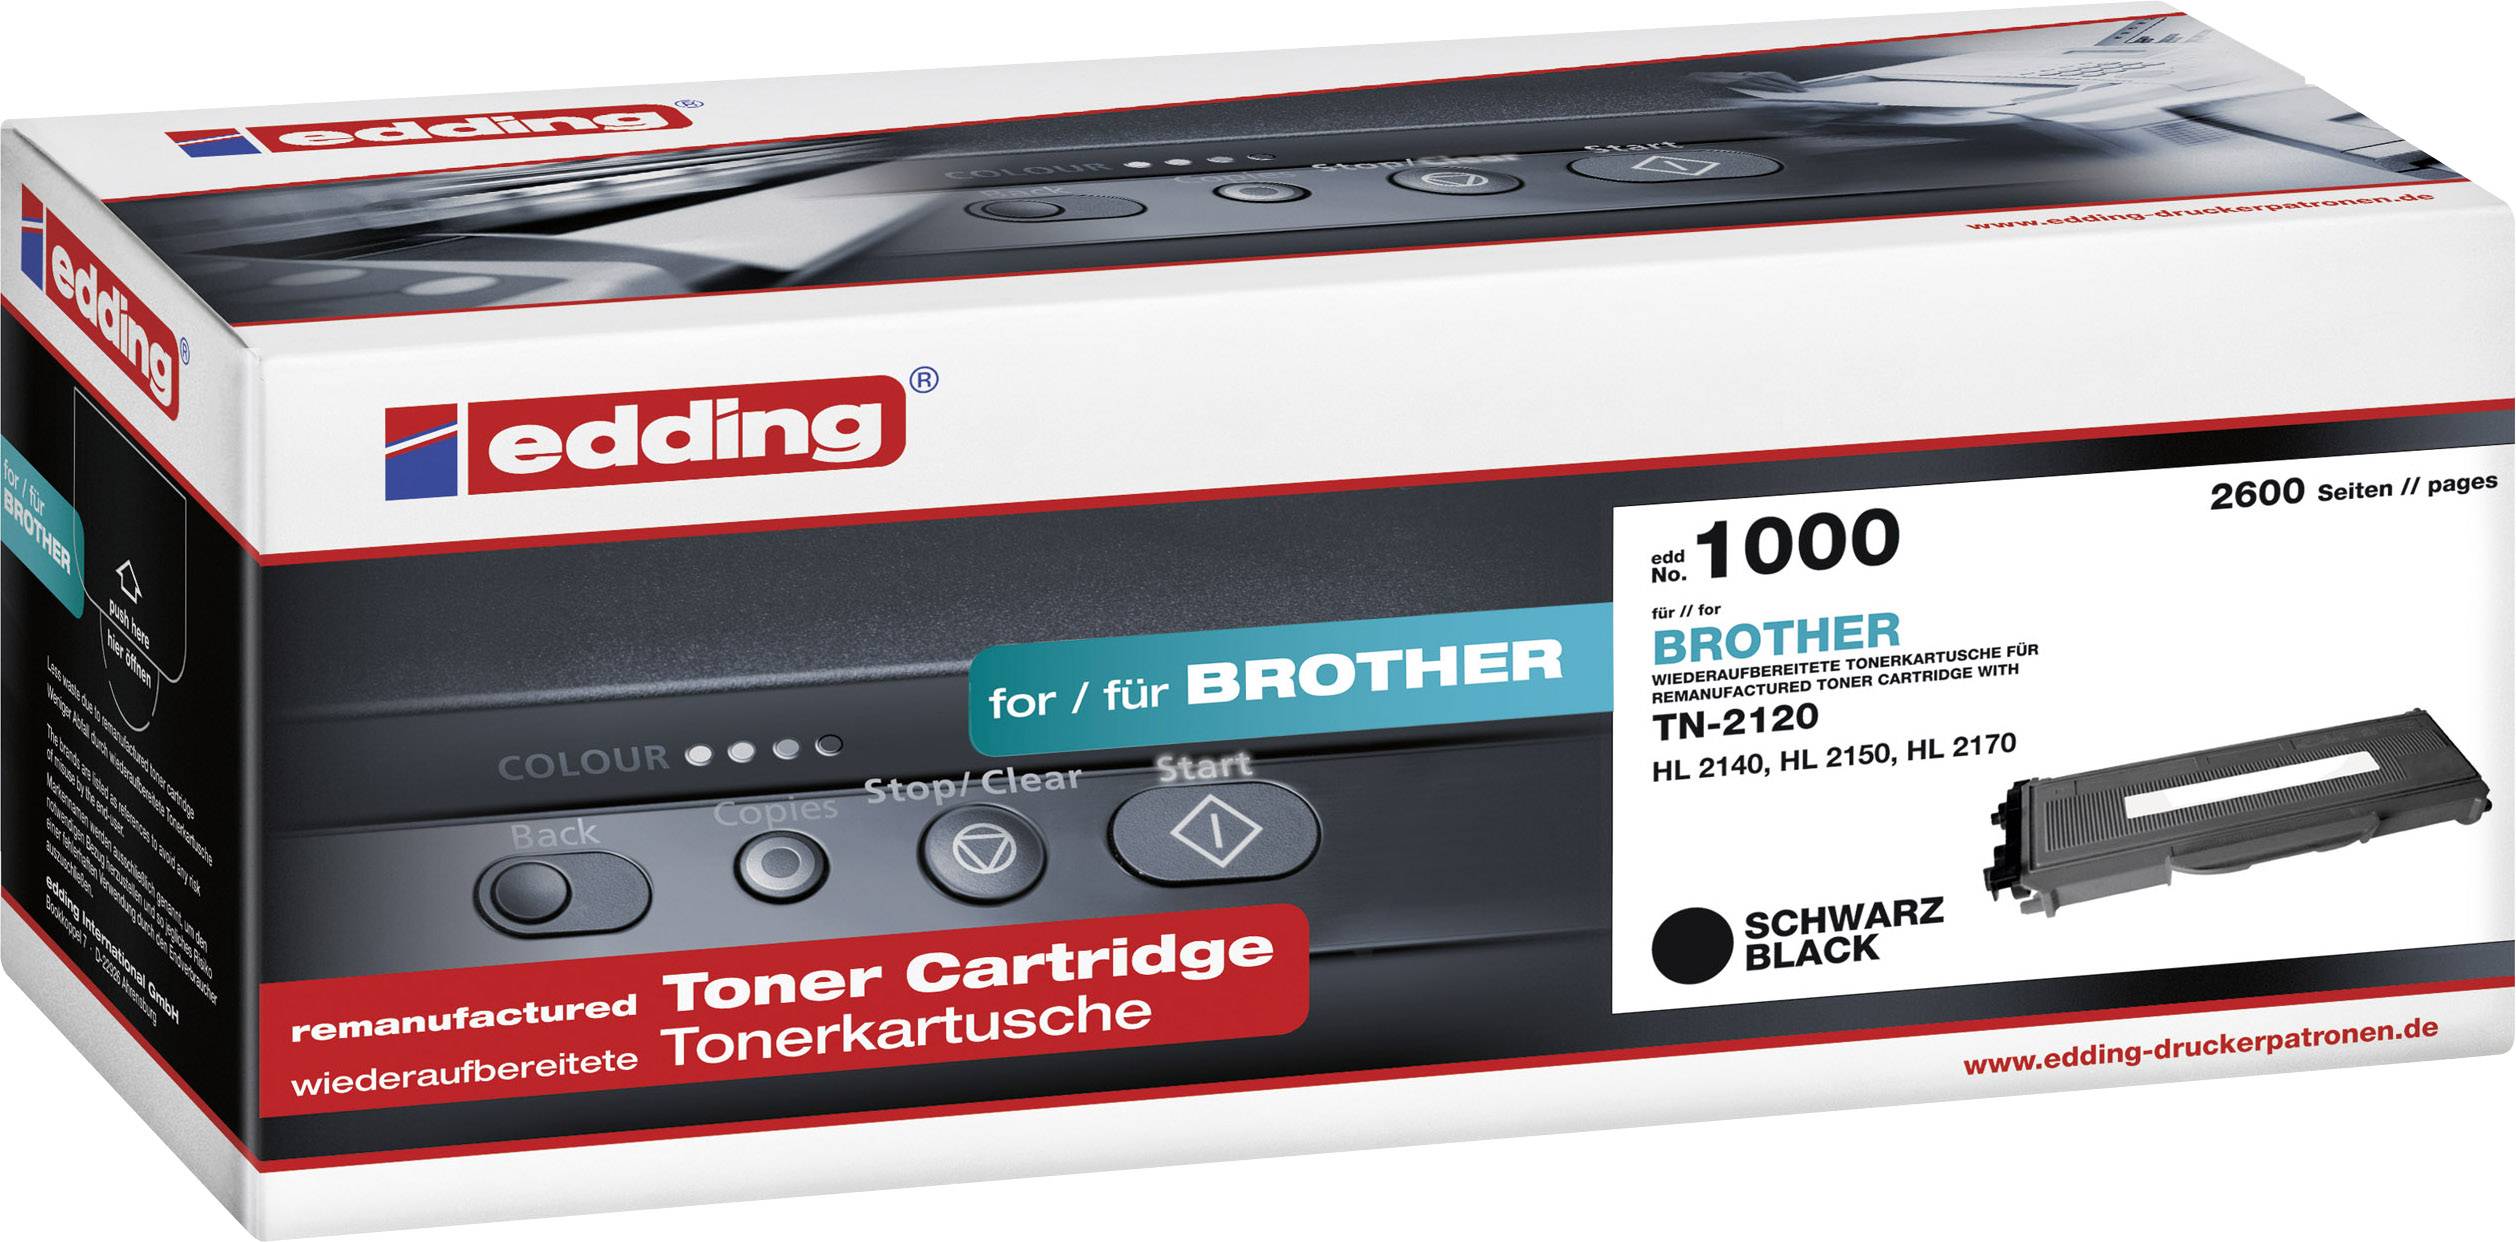 EDDING Toner ersetzt Brother TN-2120 Kompatibel Schwarz 2600 Seiten EDD-1000